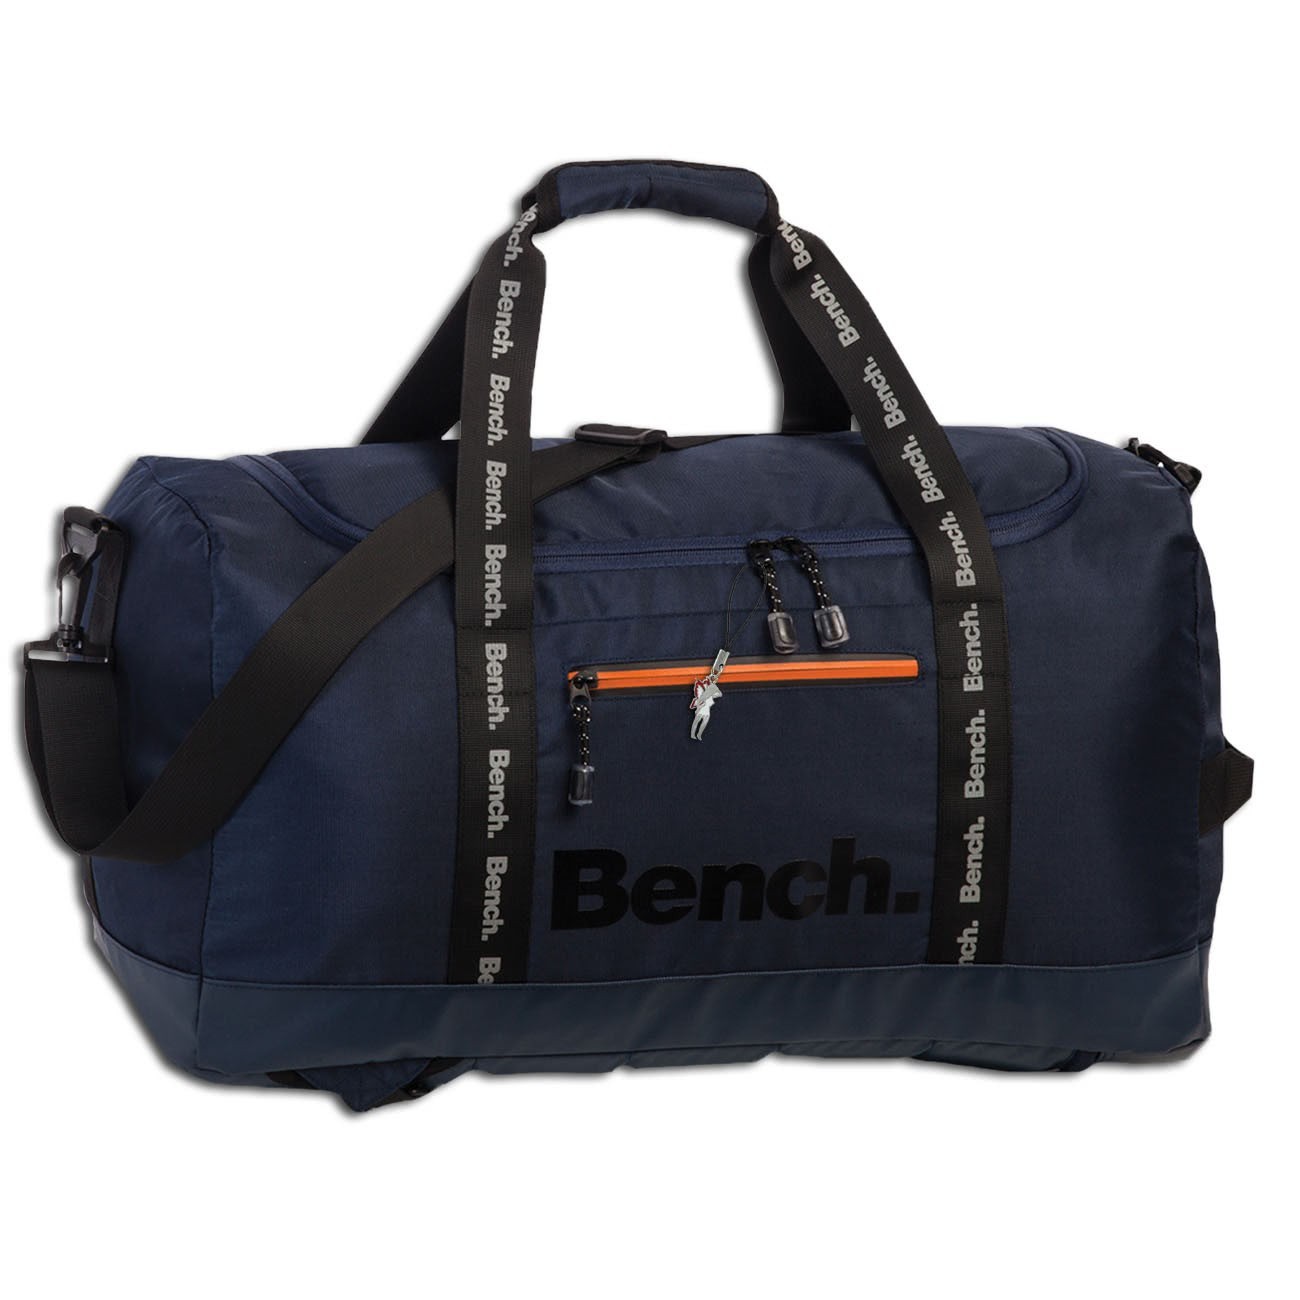 Bench 2in1 - Sporttasche mit Rucksackfunktion Nylon dunkelblau Fitness OTI302B